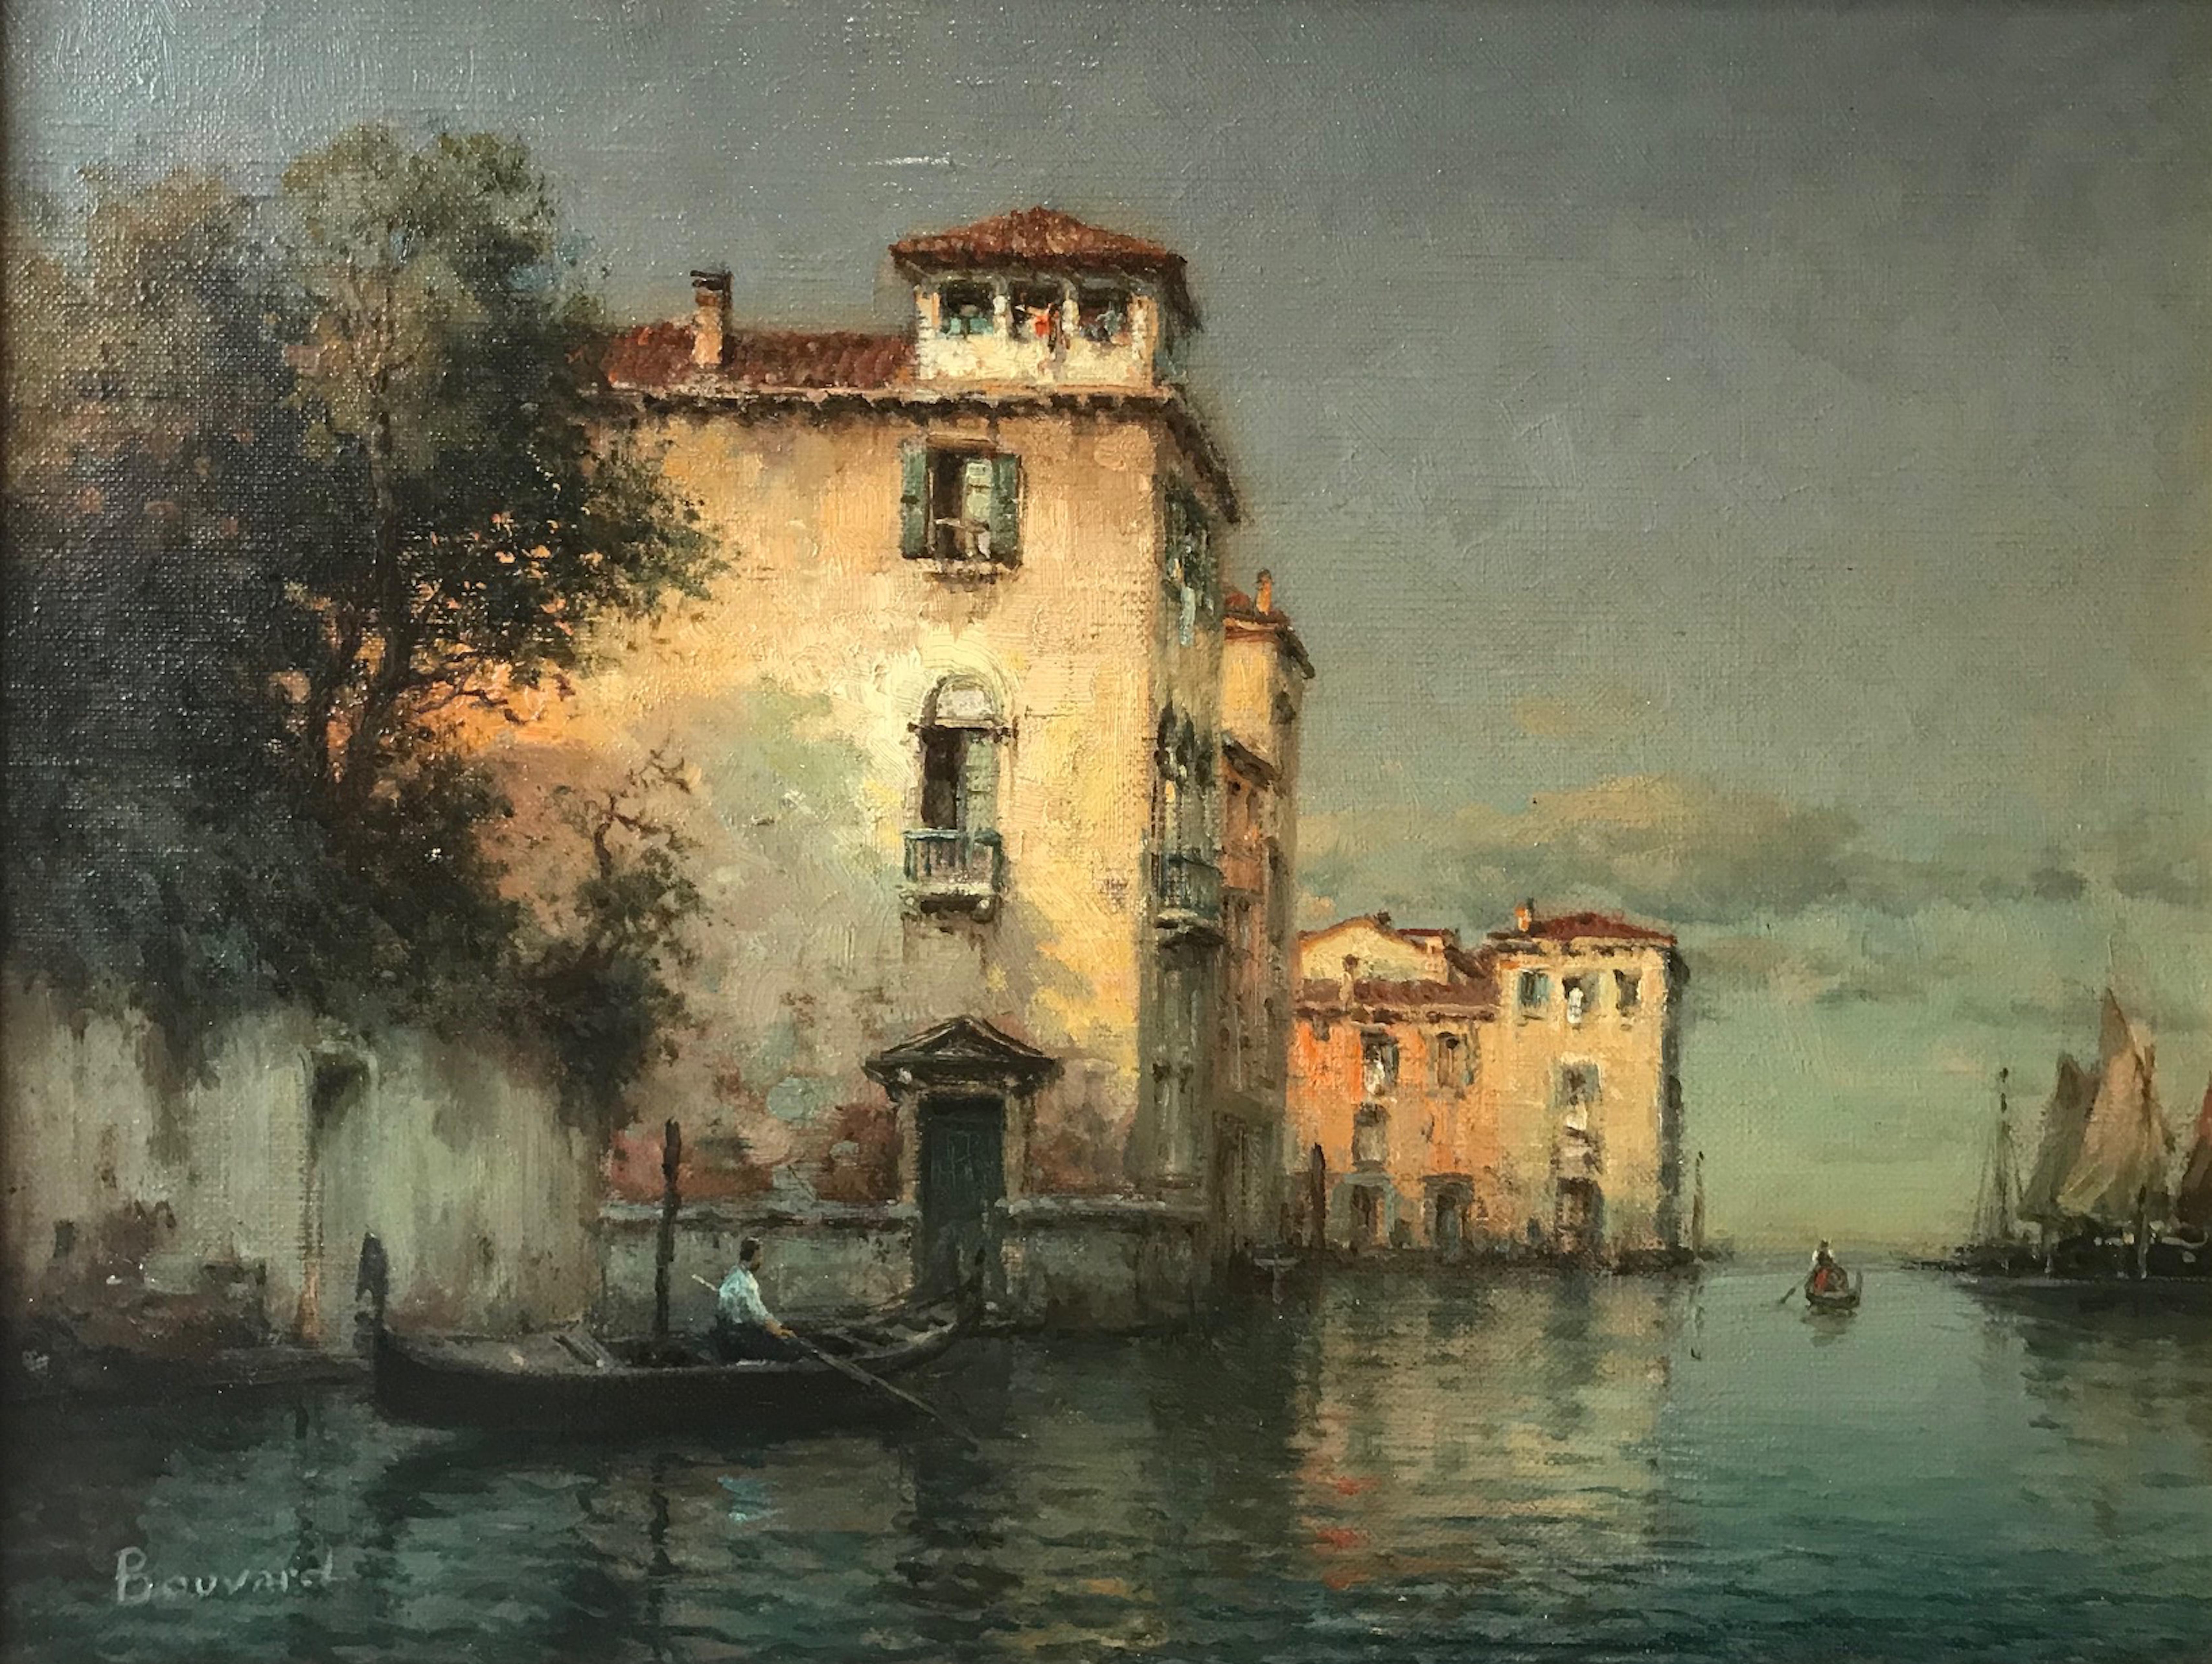 Landscape painting of Venice by Antoine Bouvard Senior Still Waters' - Painting by Antoine Bouvard (Marc Aldine)